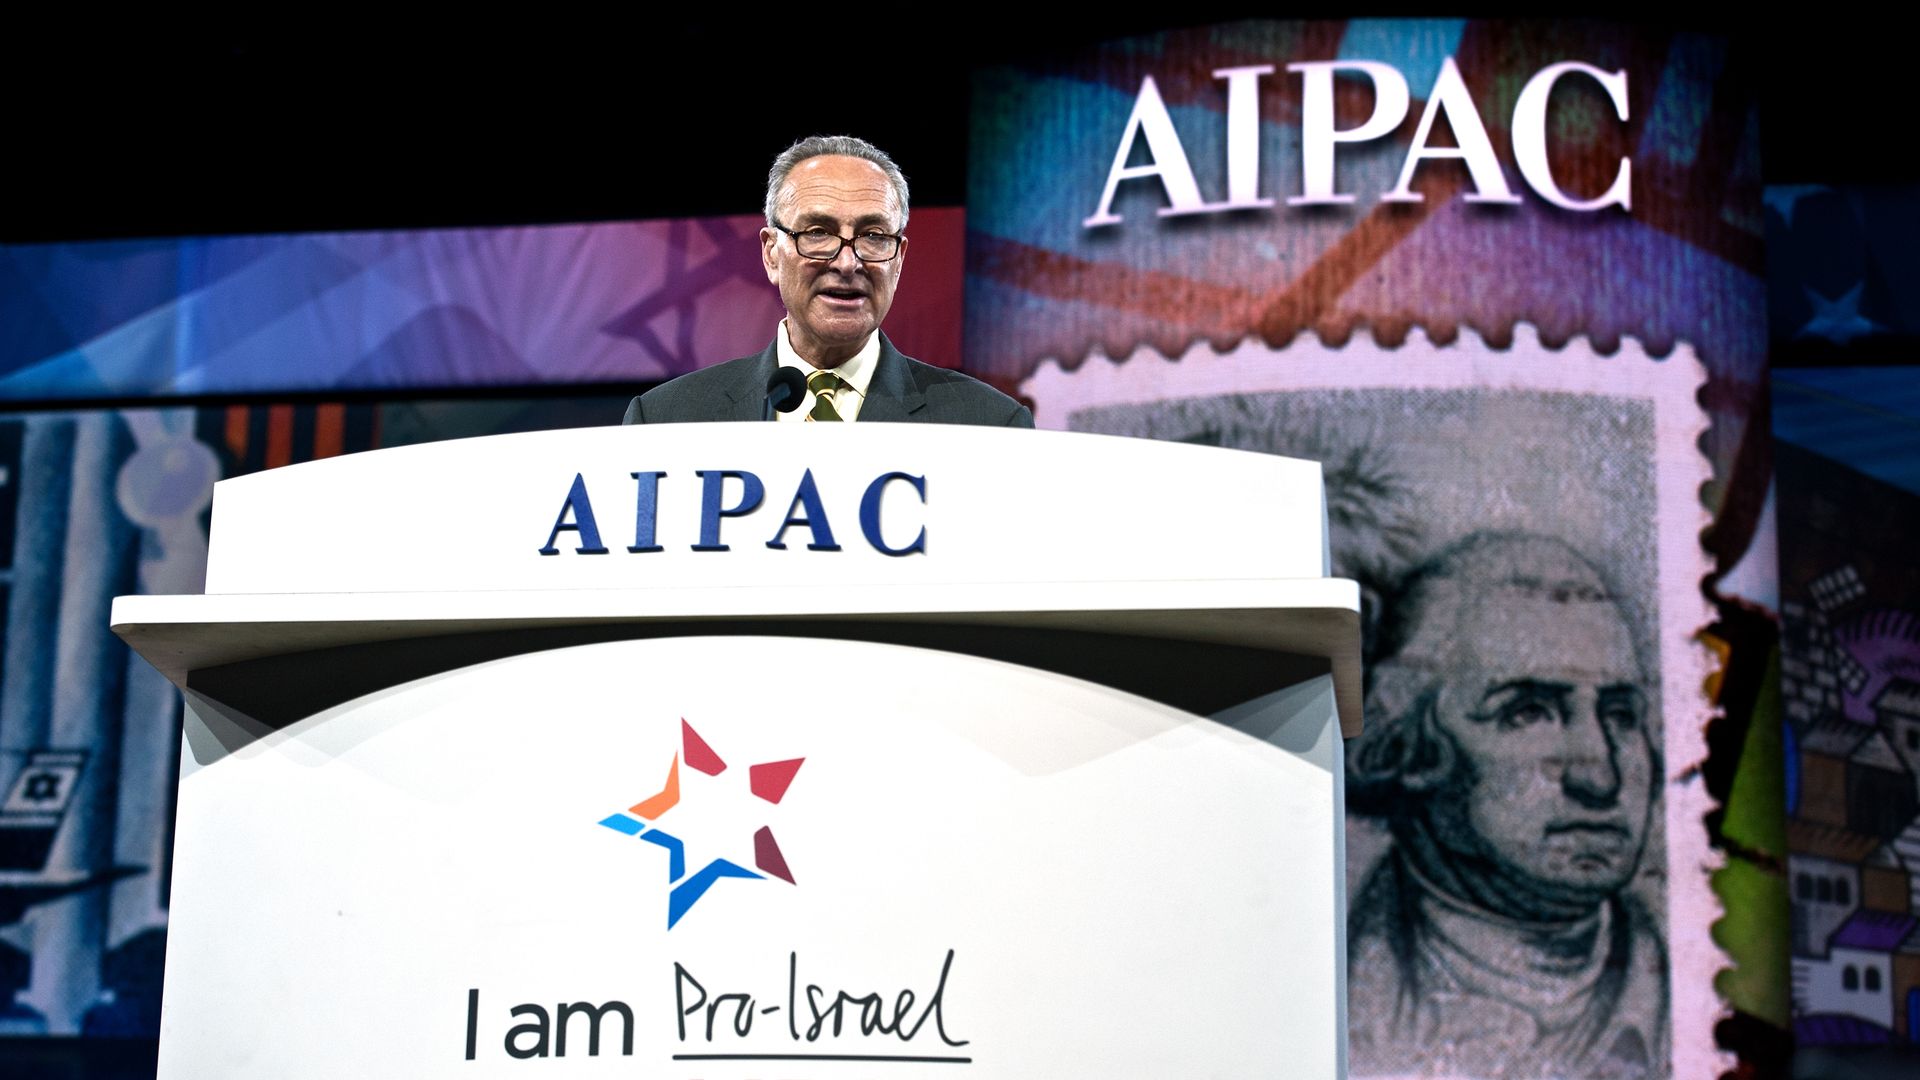 Senate Majority Leader Chuck Schumer is seen addressing an AIPAC meeting in 2014.